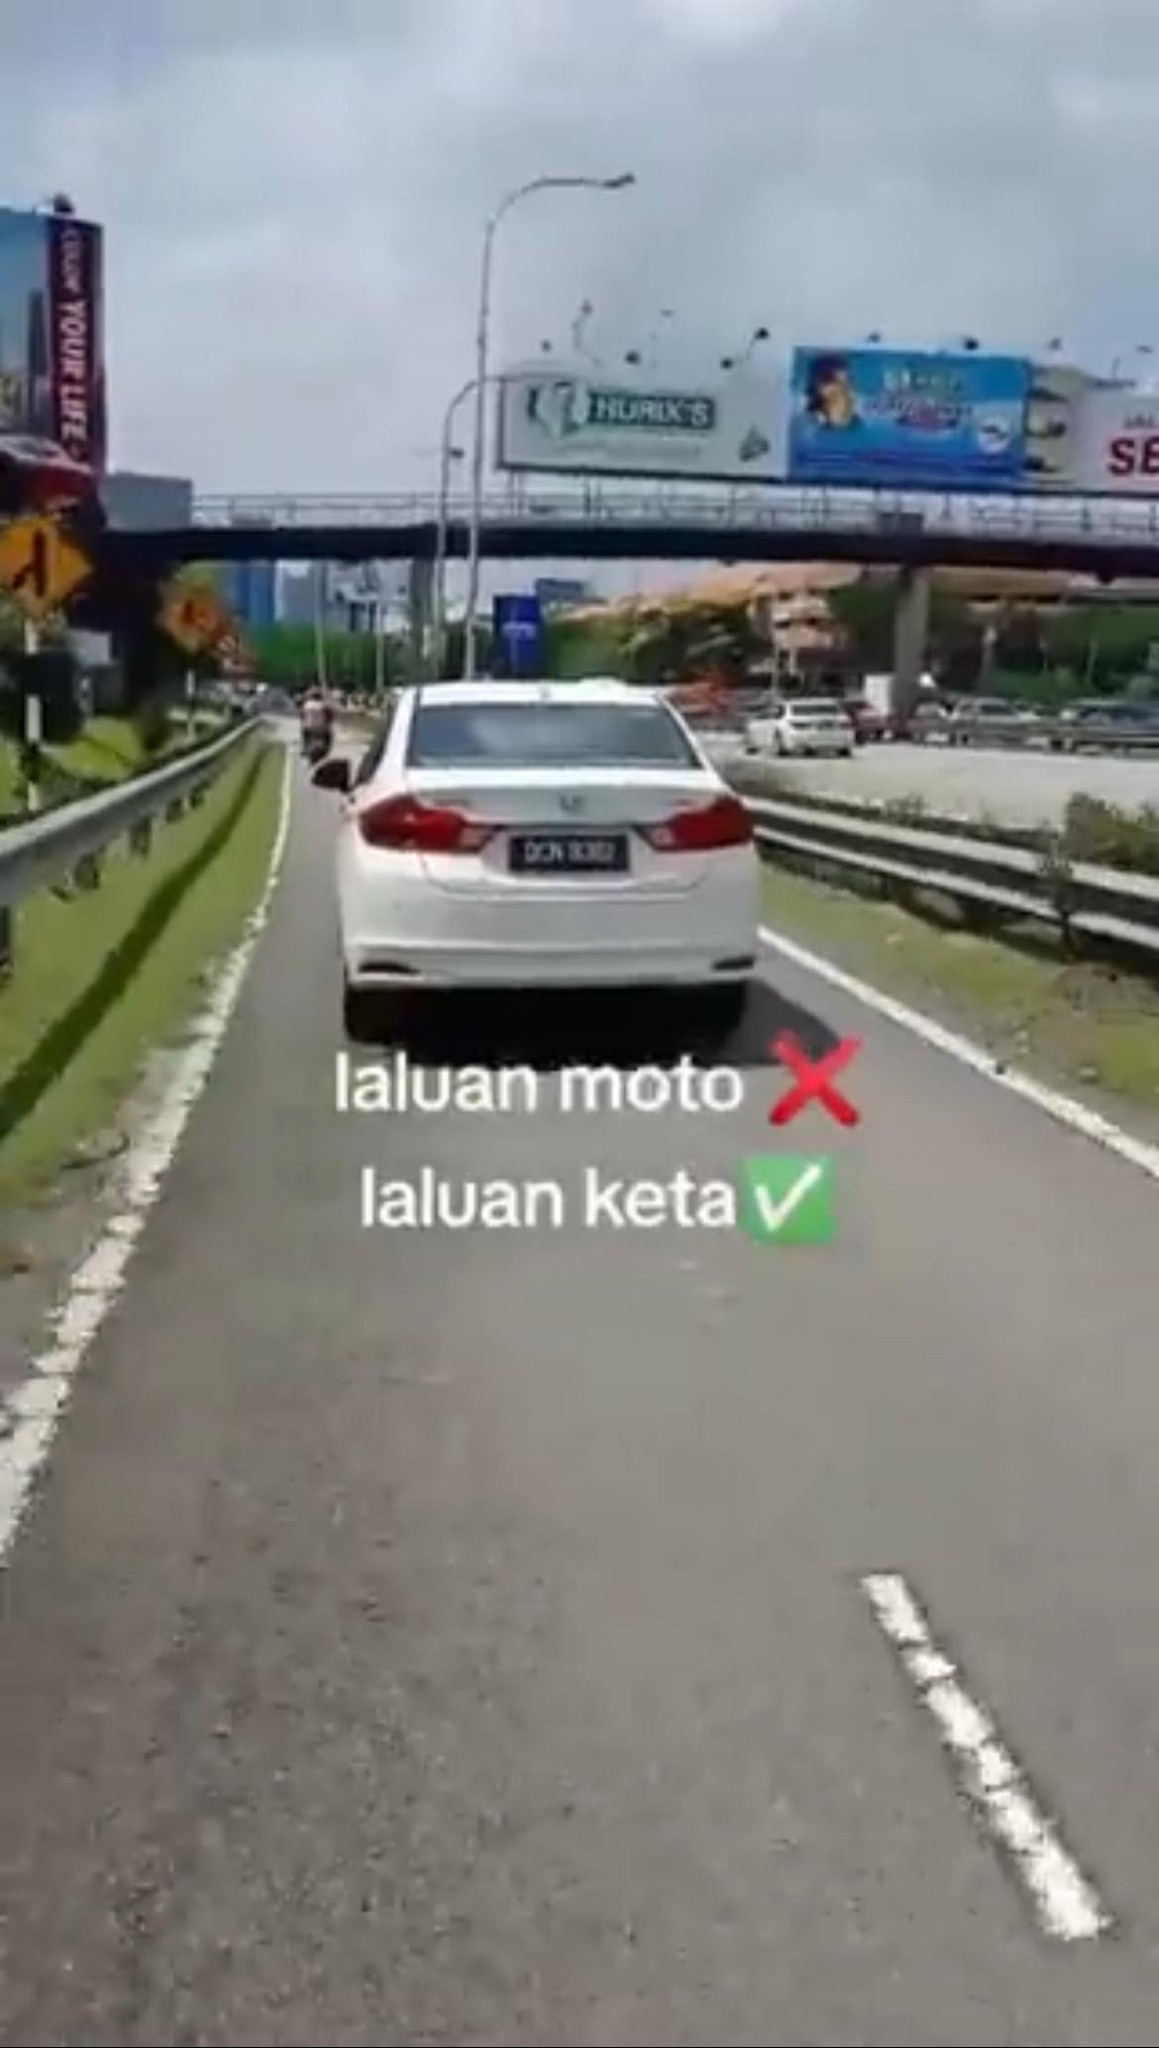 Viral video shows honda city driver using motorcycle lane in kl | weirdkaya